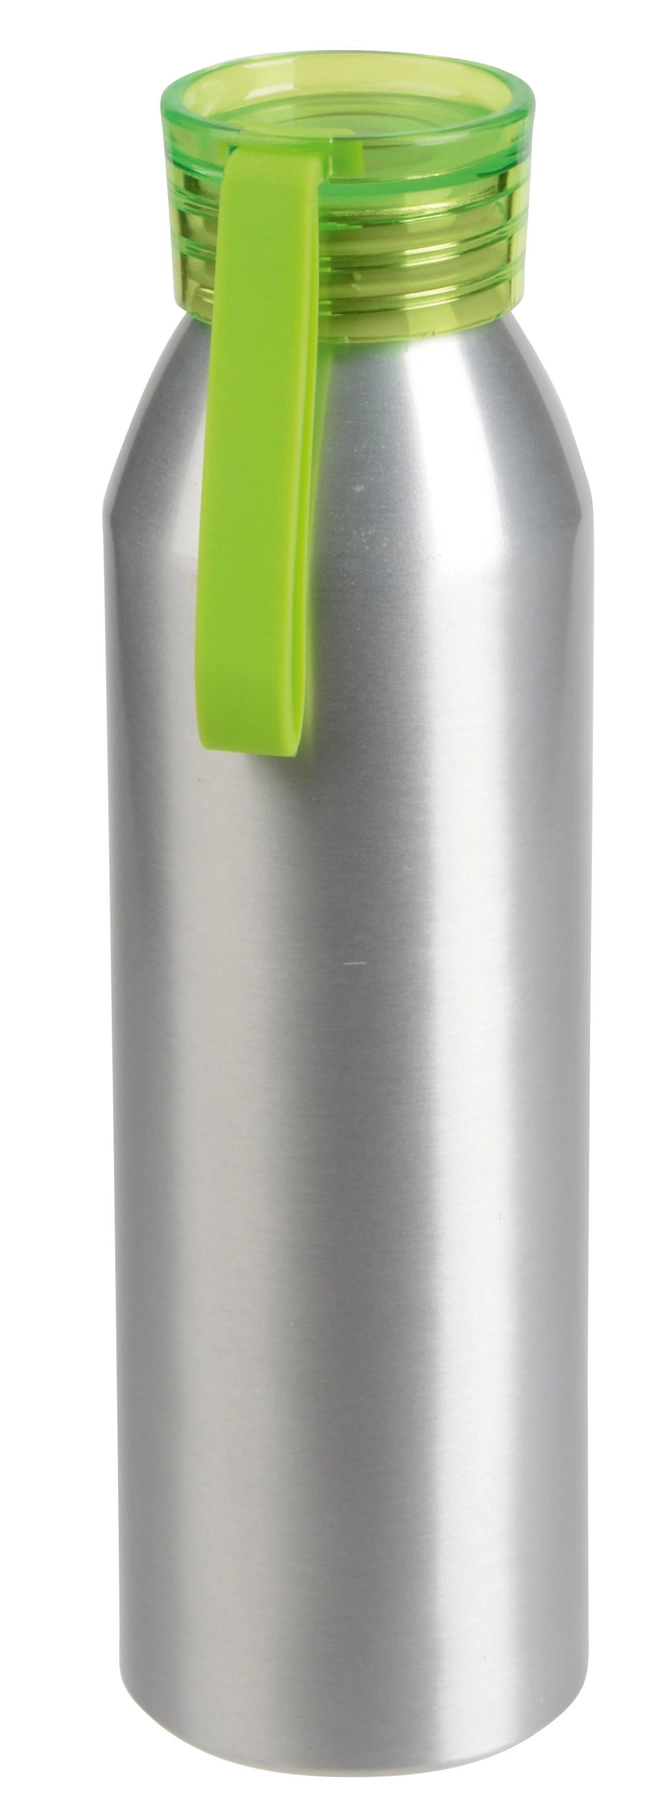 Aluminiowa butelka COLOURED, zielone jabłko 56-0304428